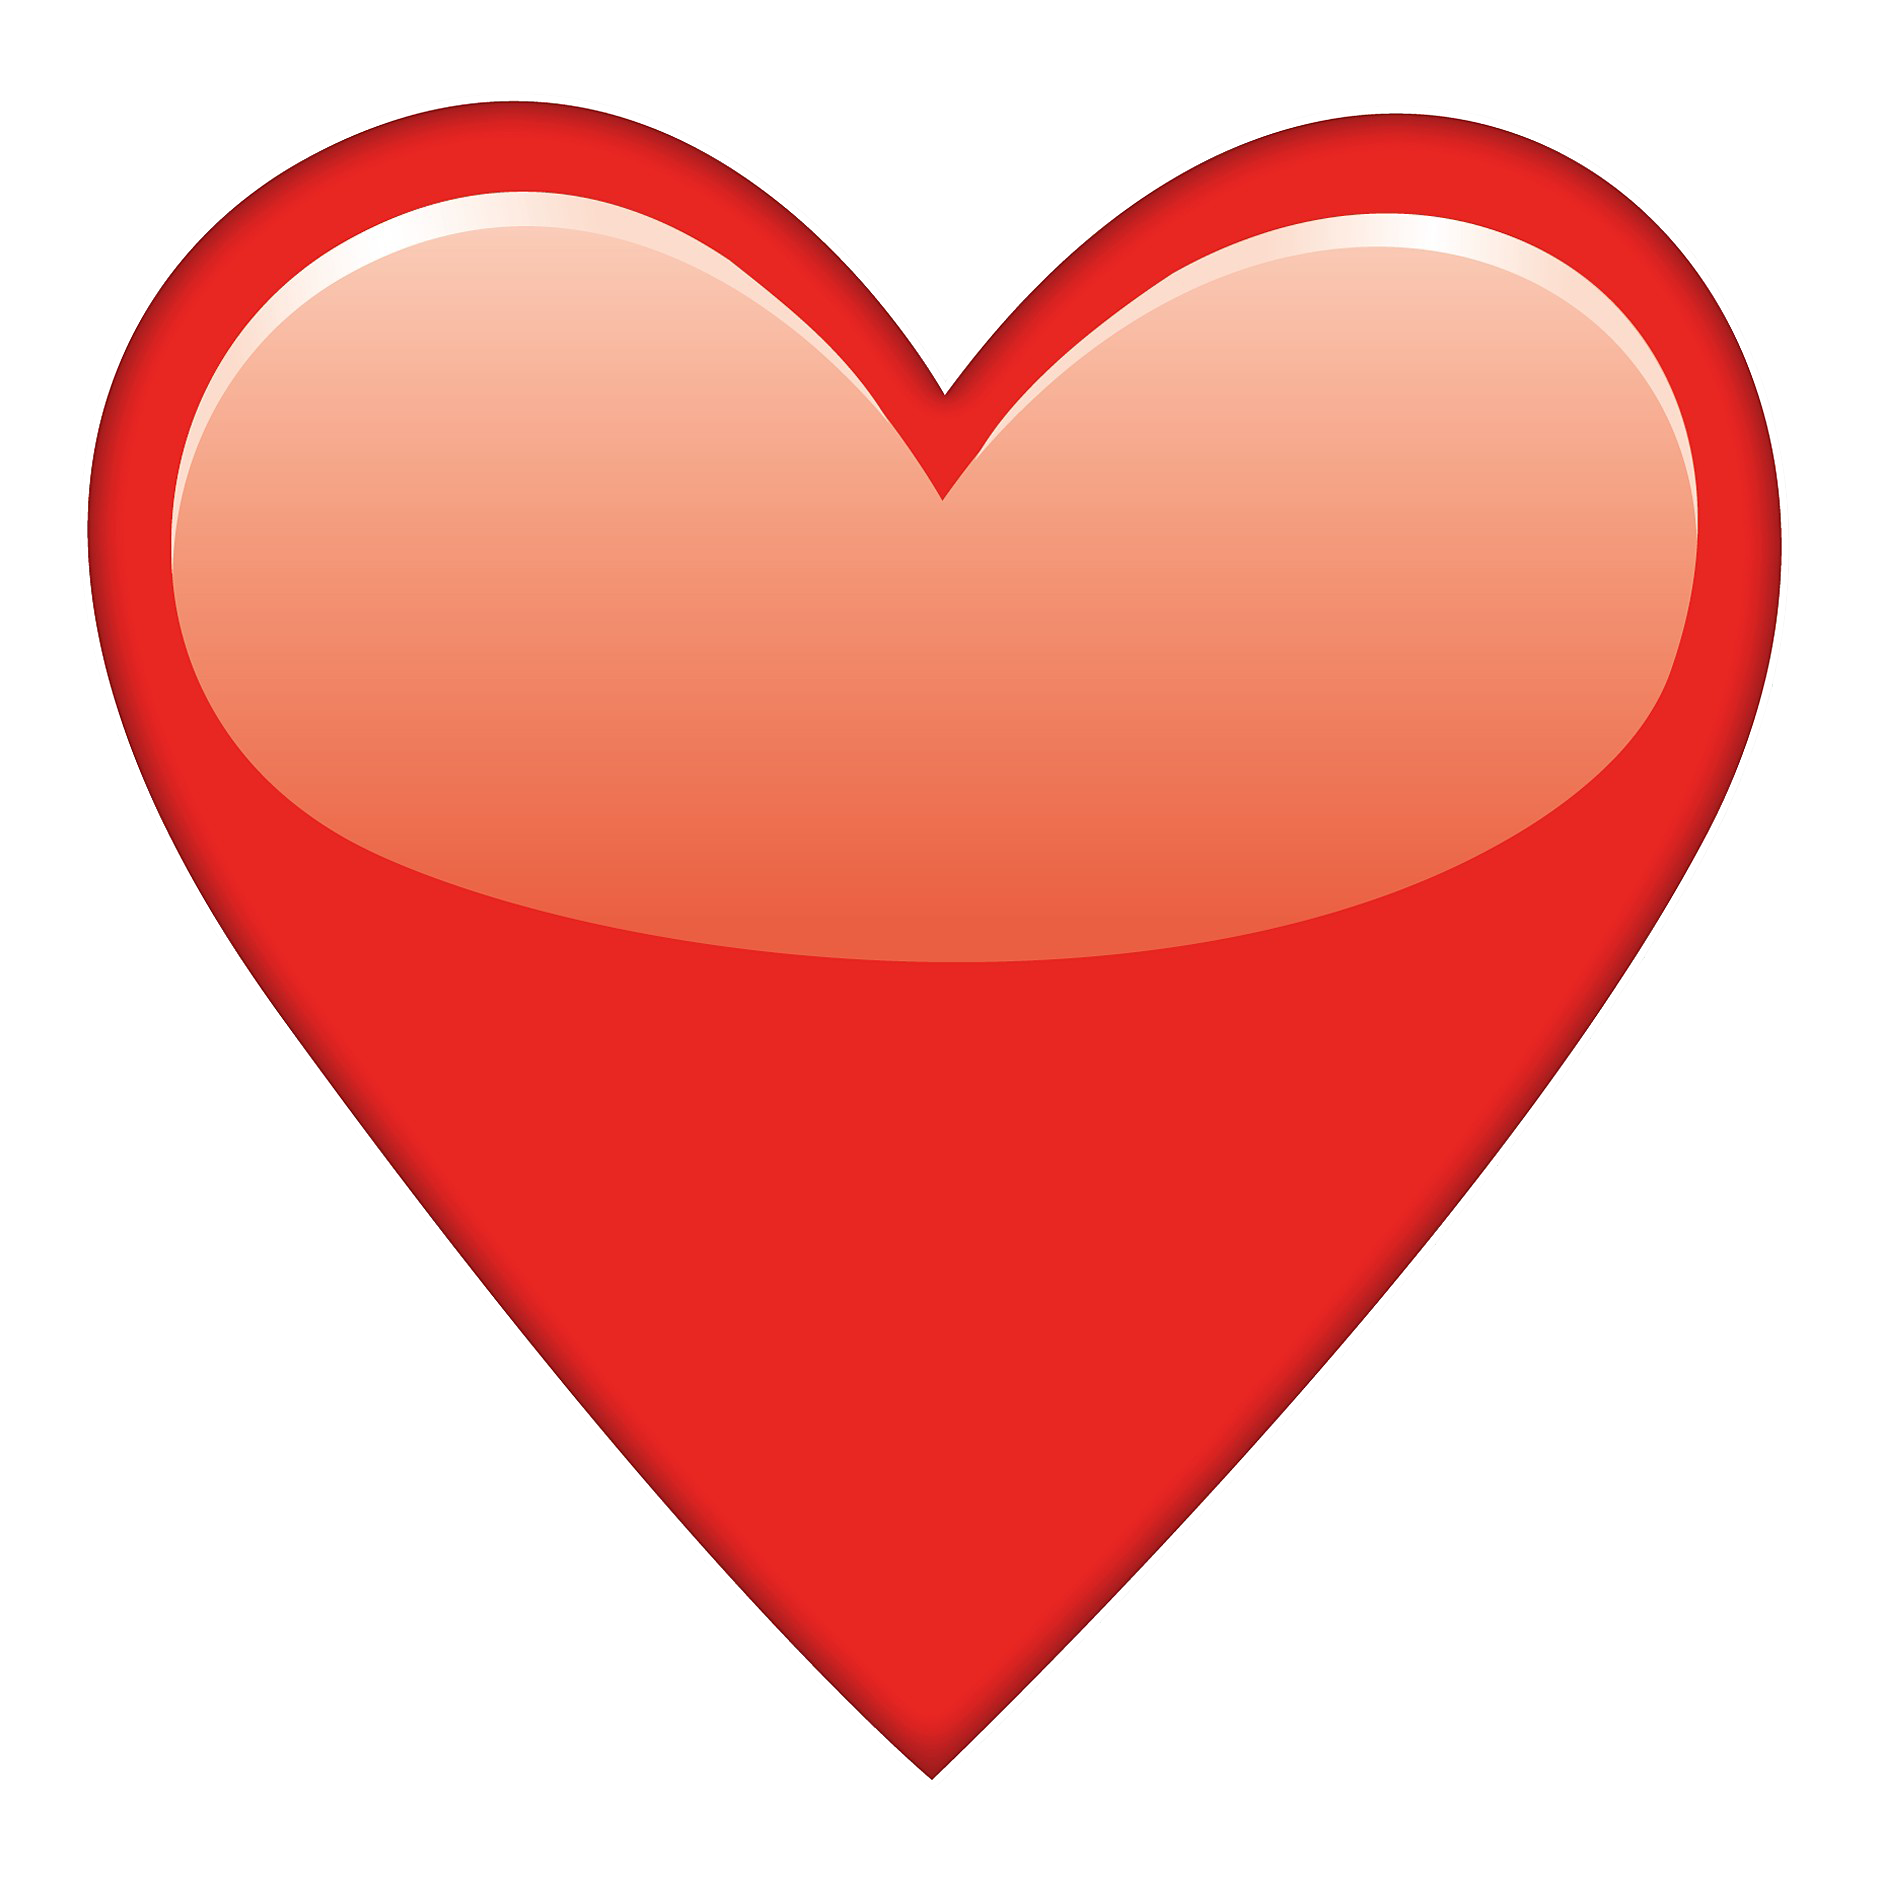 Red Heart Emoji PNG HD